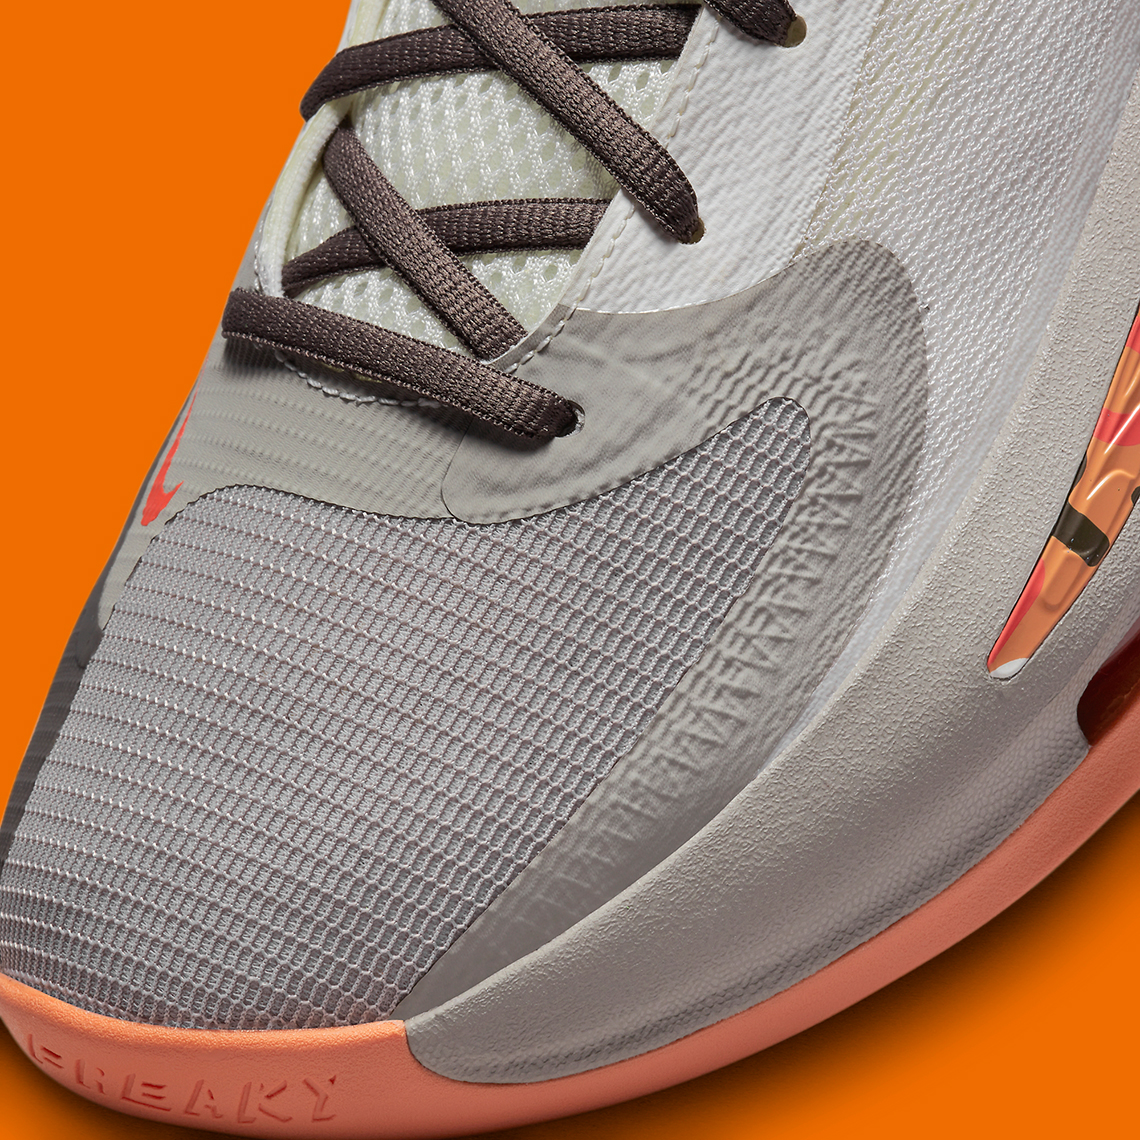 Nike nike tropical foamposite shoes Ironstone Orange Trance Cobblestone Sail Dj6149 003 7